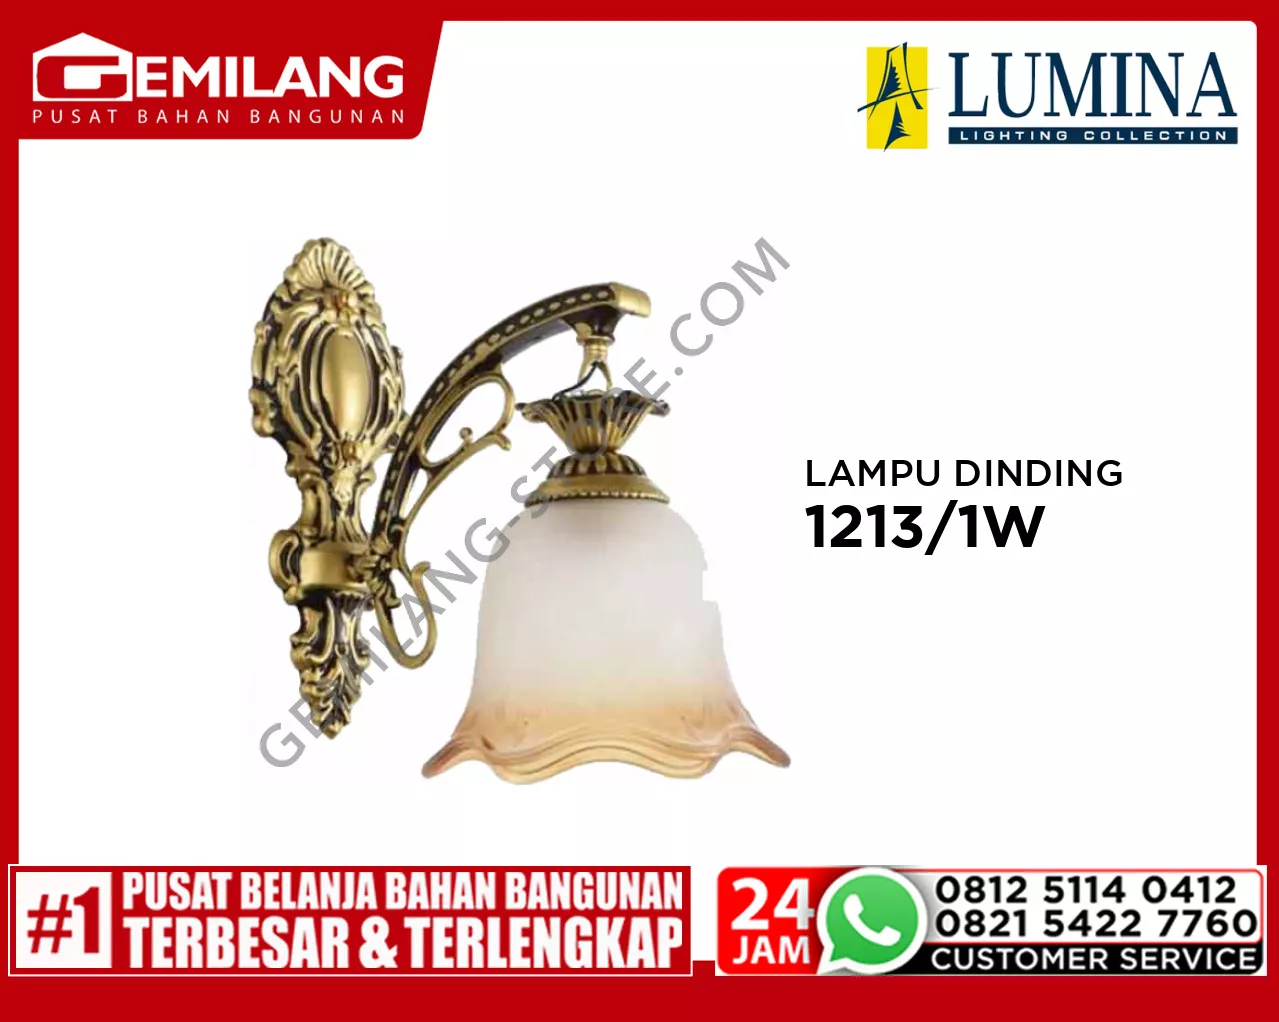 LAMPU DINDING 1213/1W